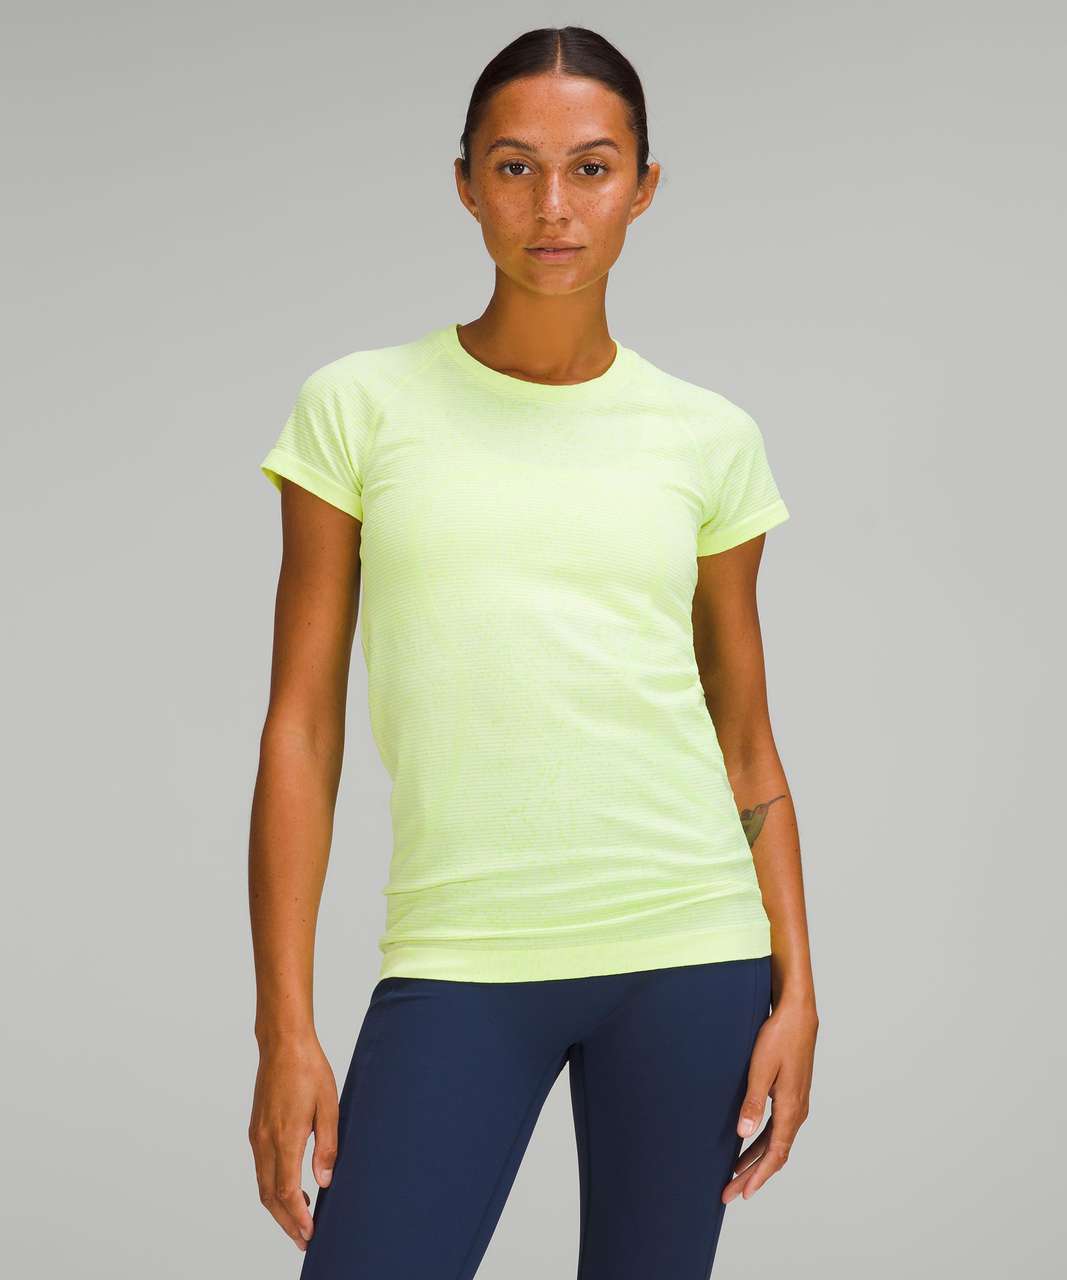 Lululemon Swiftly Tech Short Sleeve Shirt 2.0 - Distorted Noise Neon Lemon Sorbet / Highlight Yellow